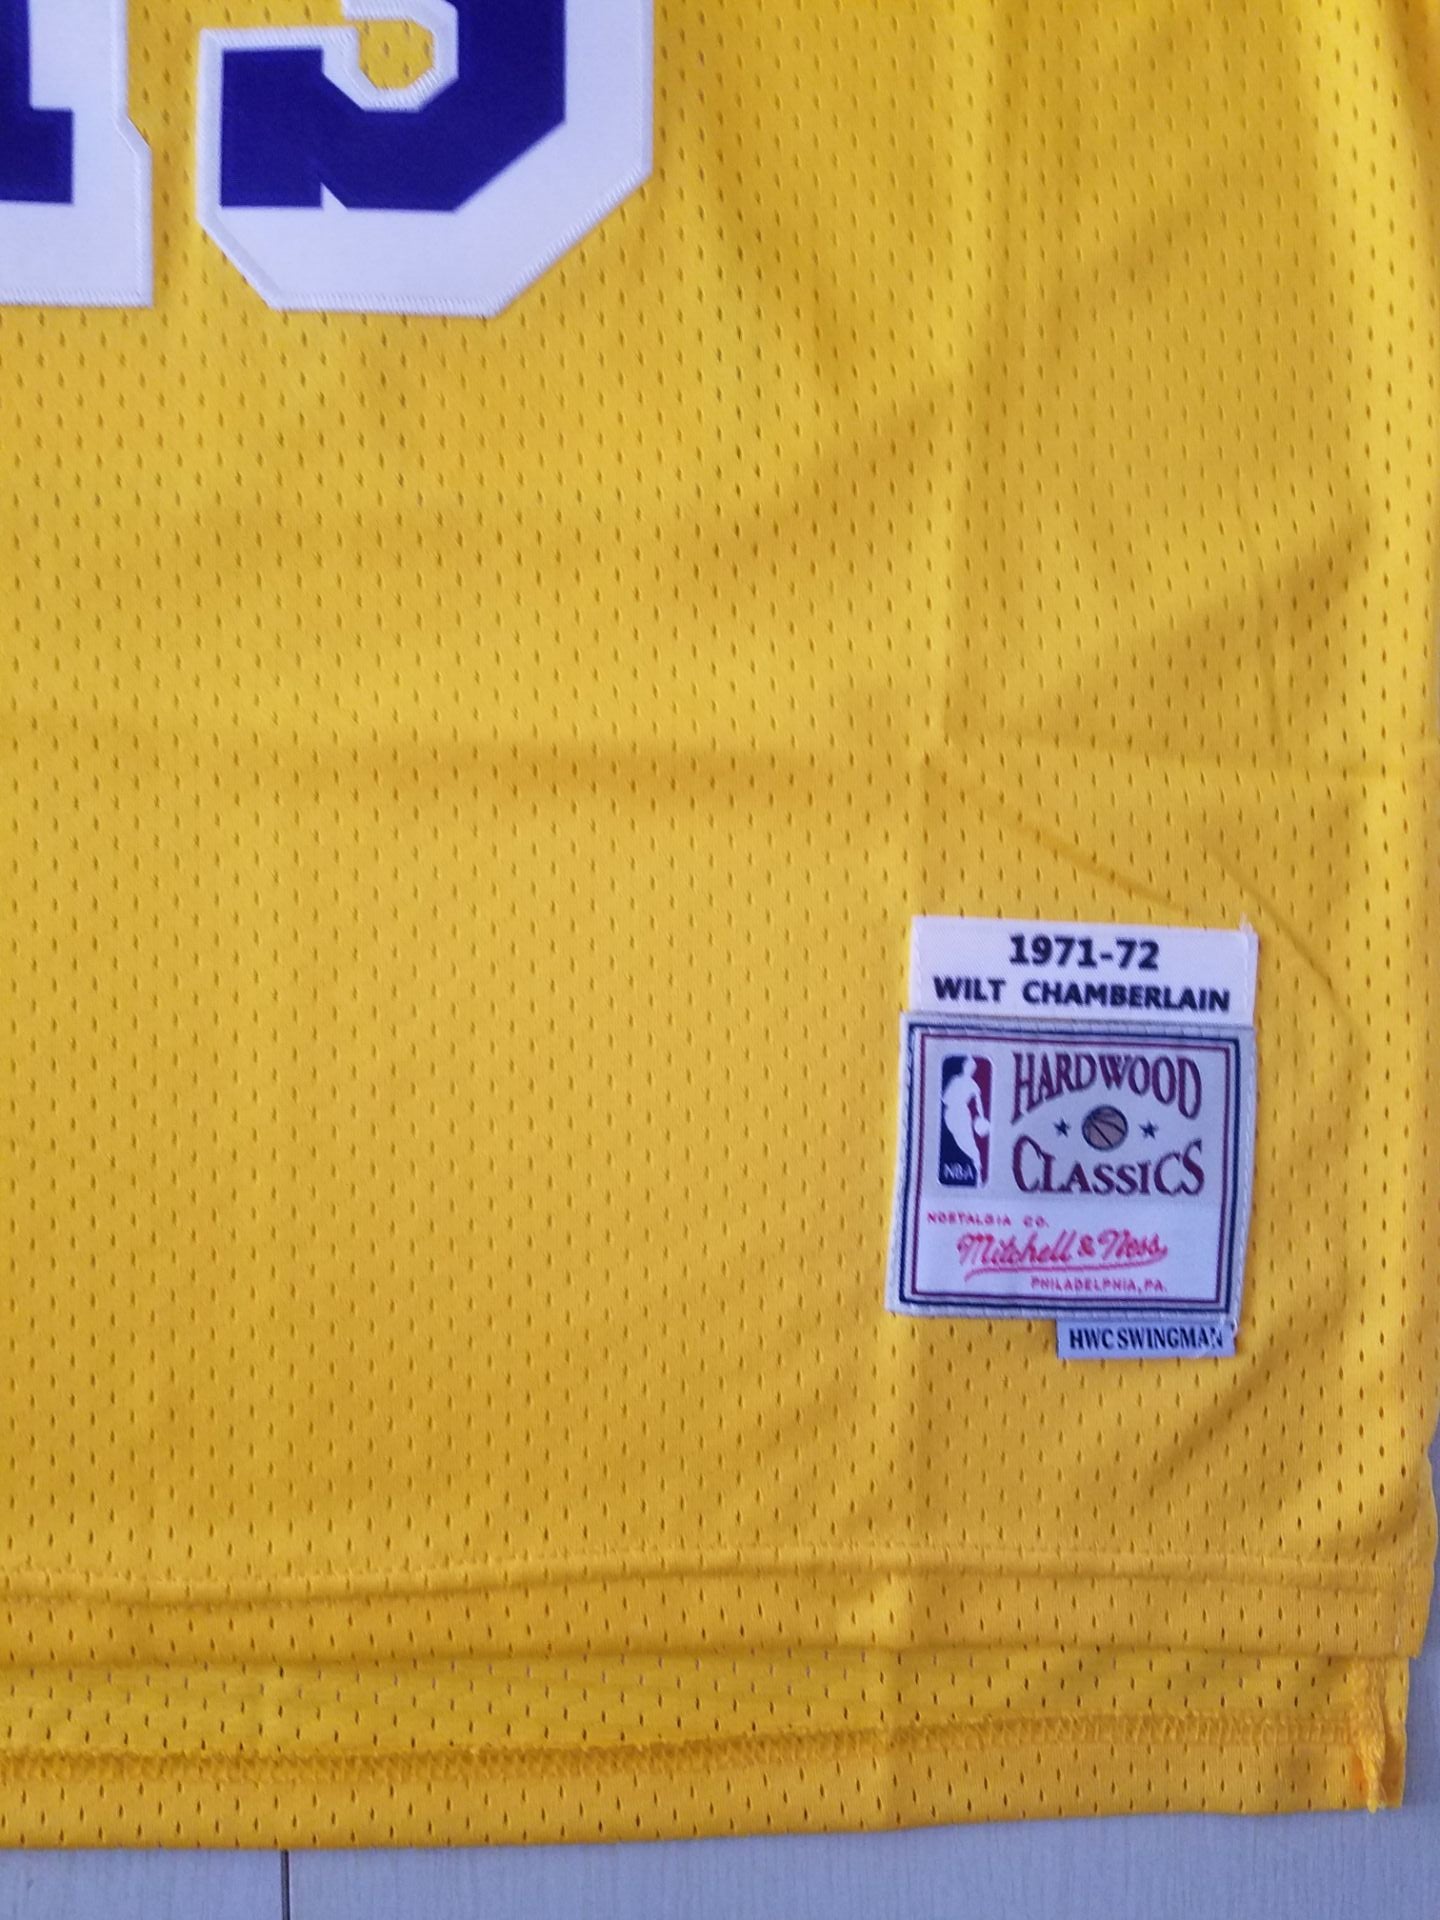 Los Angeles Lakers Wilt Chamberlain #13 Yellow Classics Swingman-Trikot für Herren